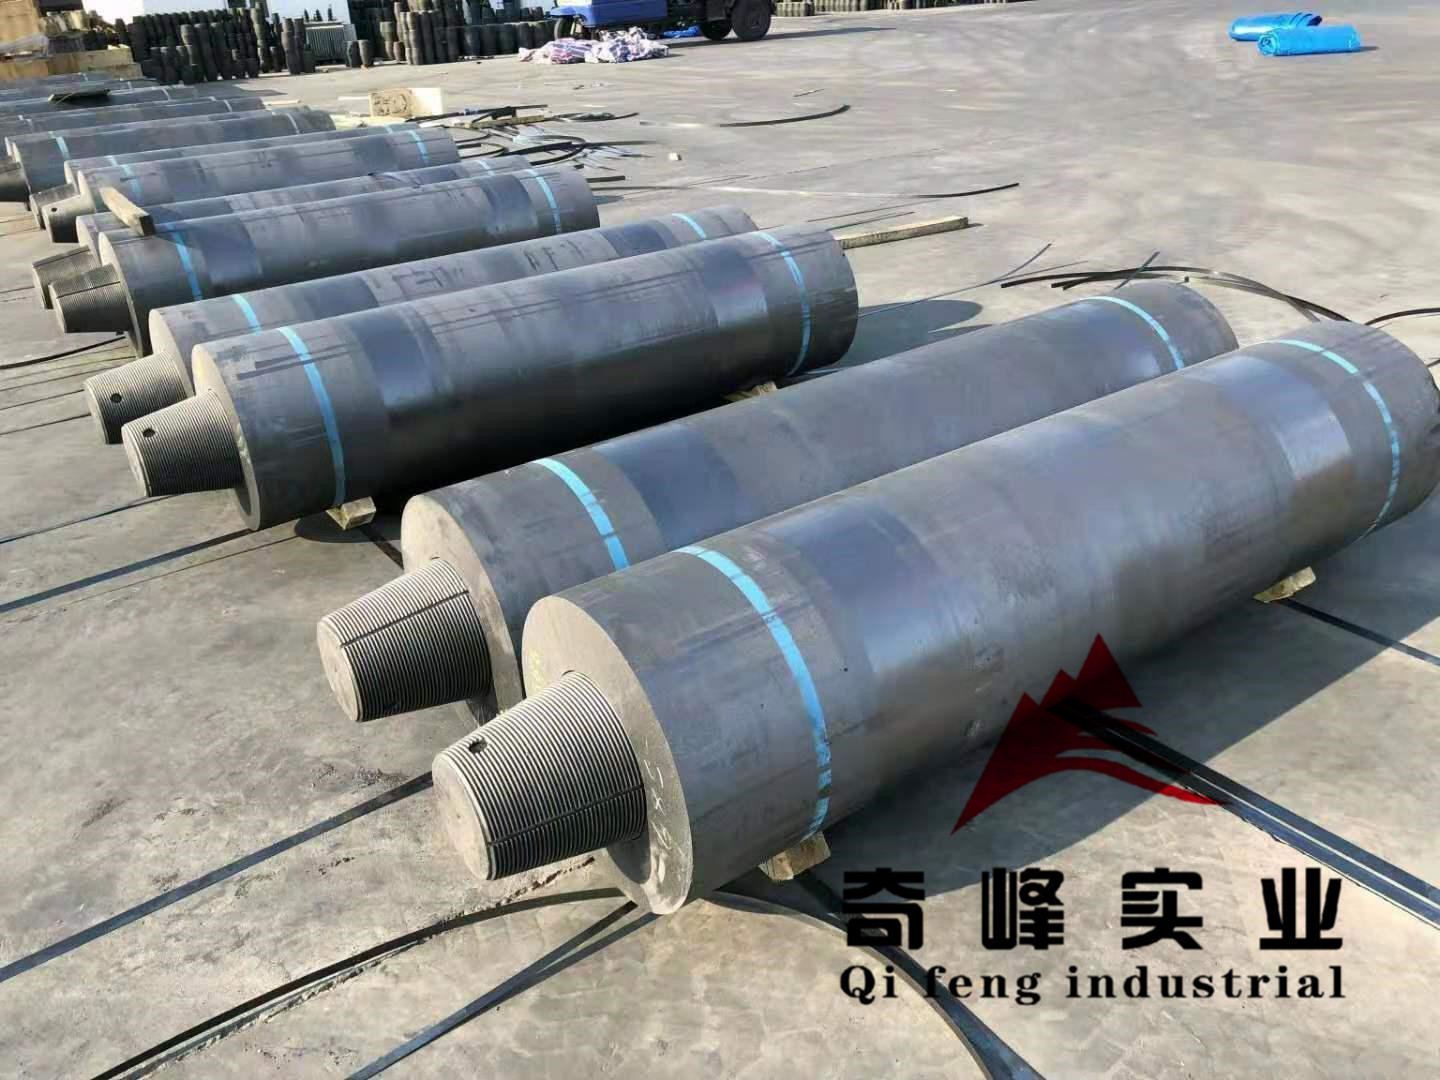 Eu terminates anti-subsidy investigation into China’s graphite electrode system